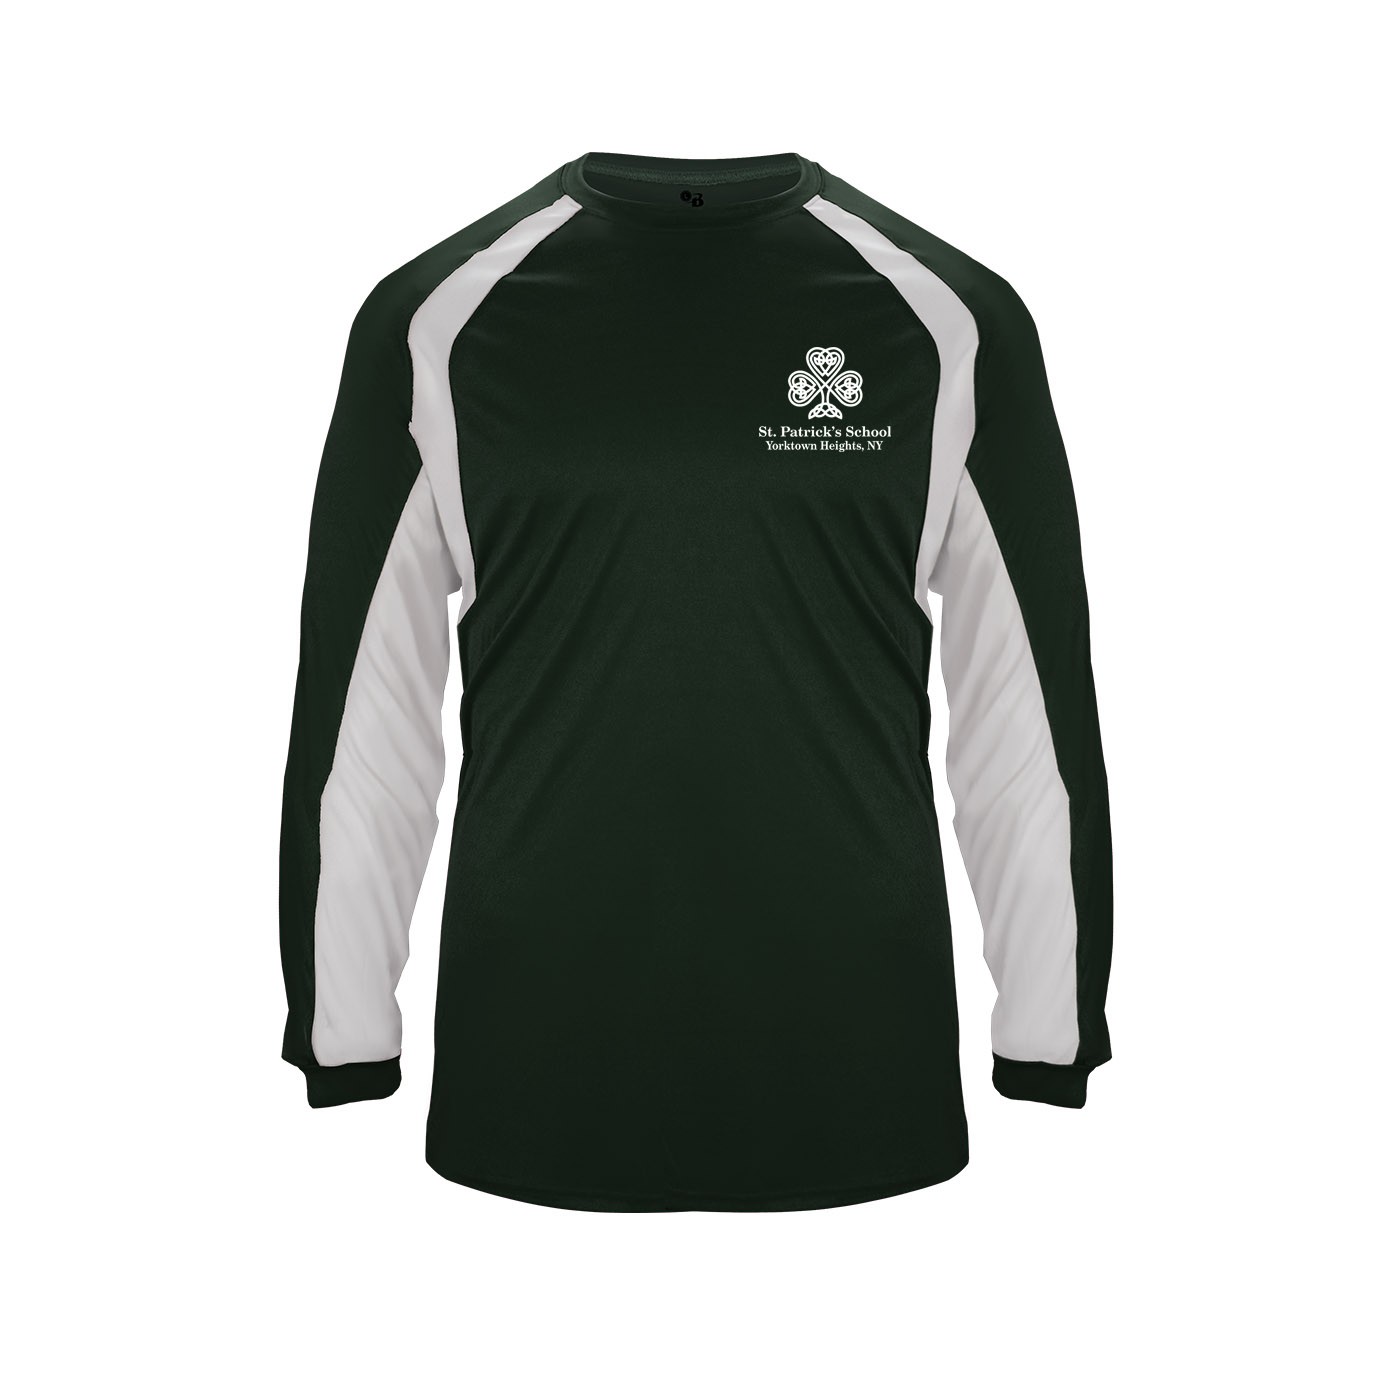 SPS Spirit Hook L/S T-Shirt w/ Left Crest Logo - Please Allow 2-3 Weeks for Delivery